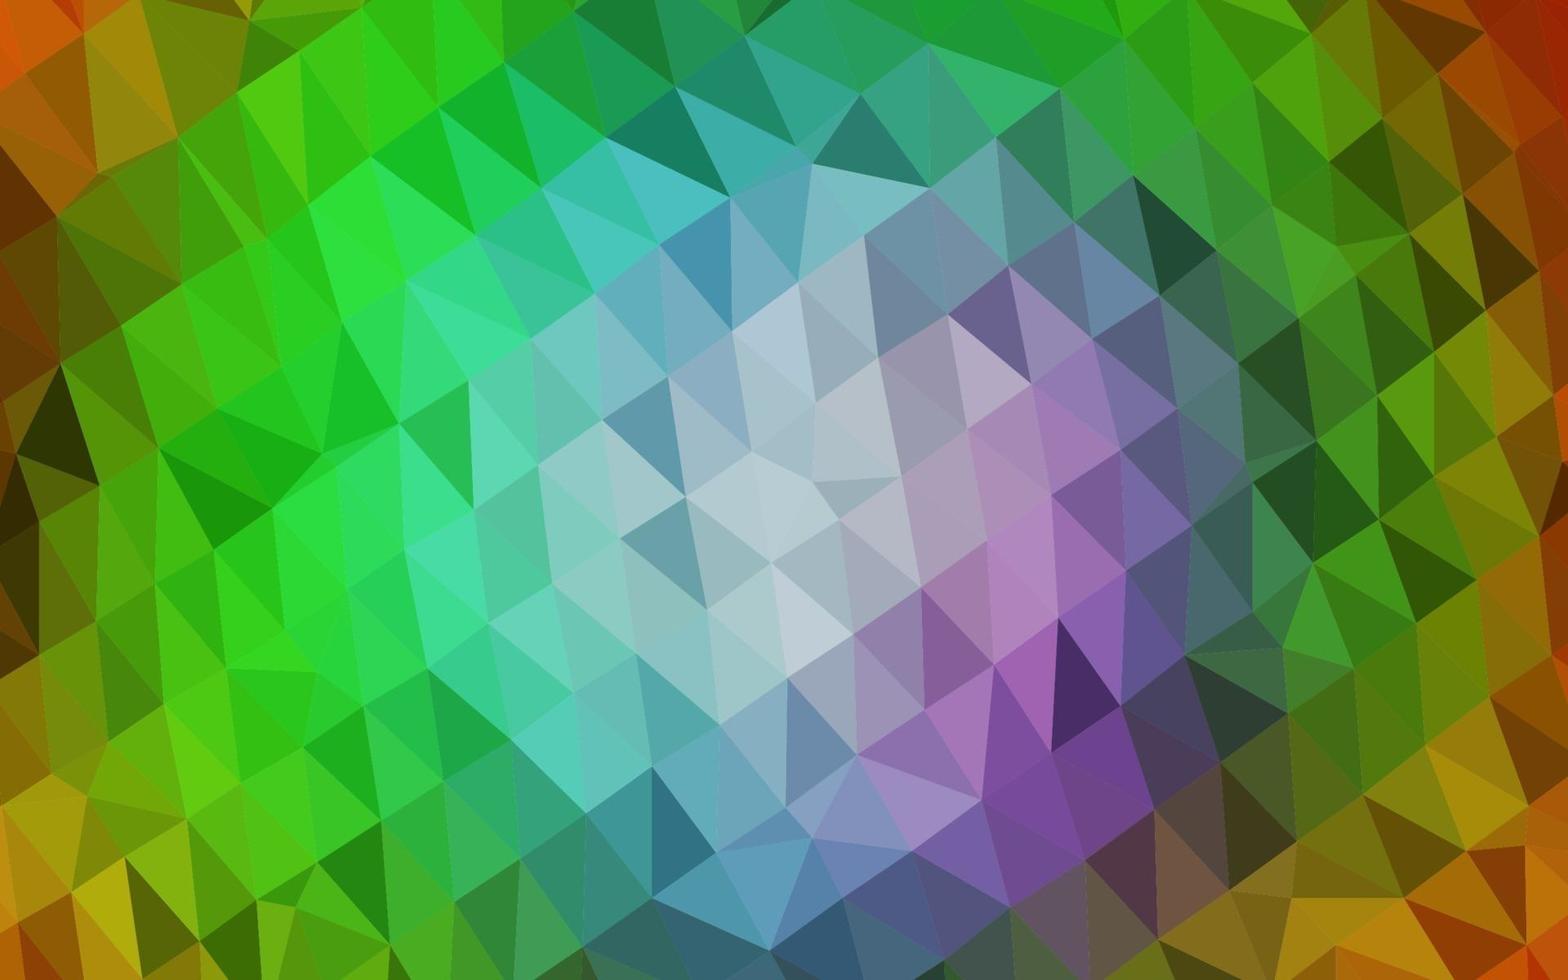 luz multicolor, padrão de triângulo embaçado de vetor de arco-íris.